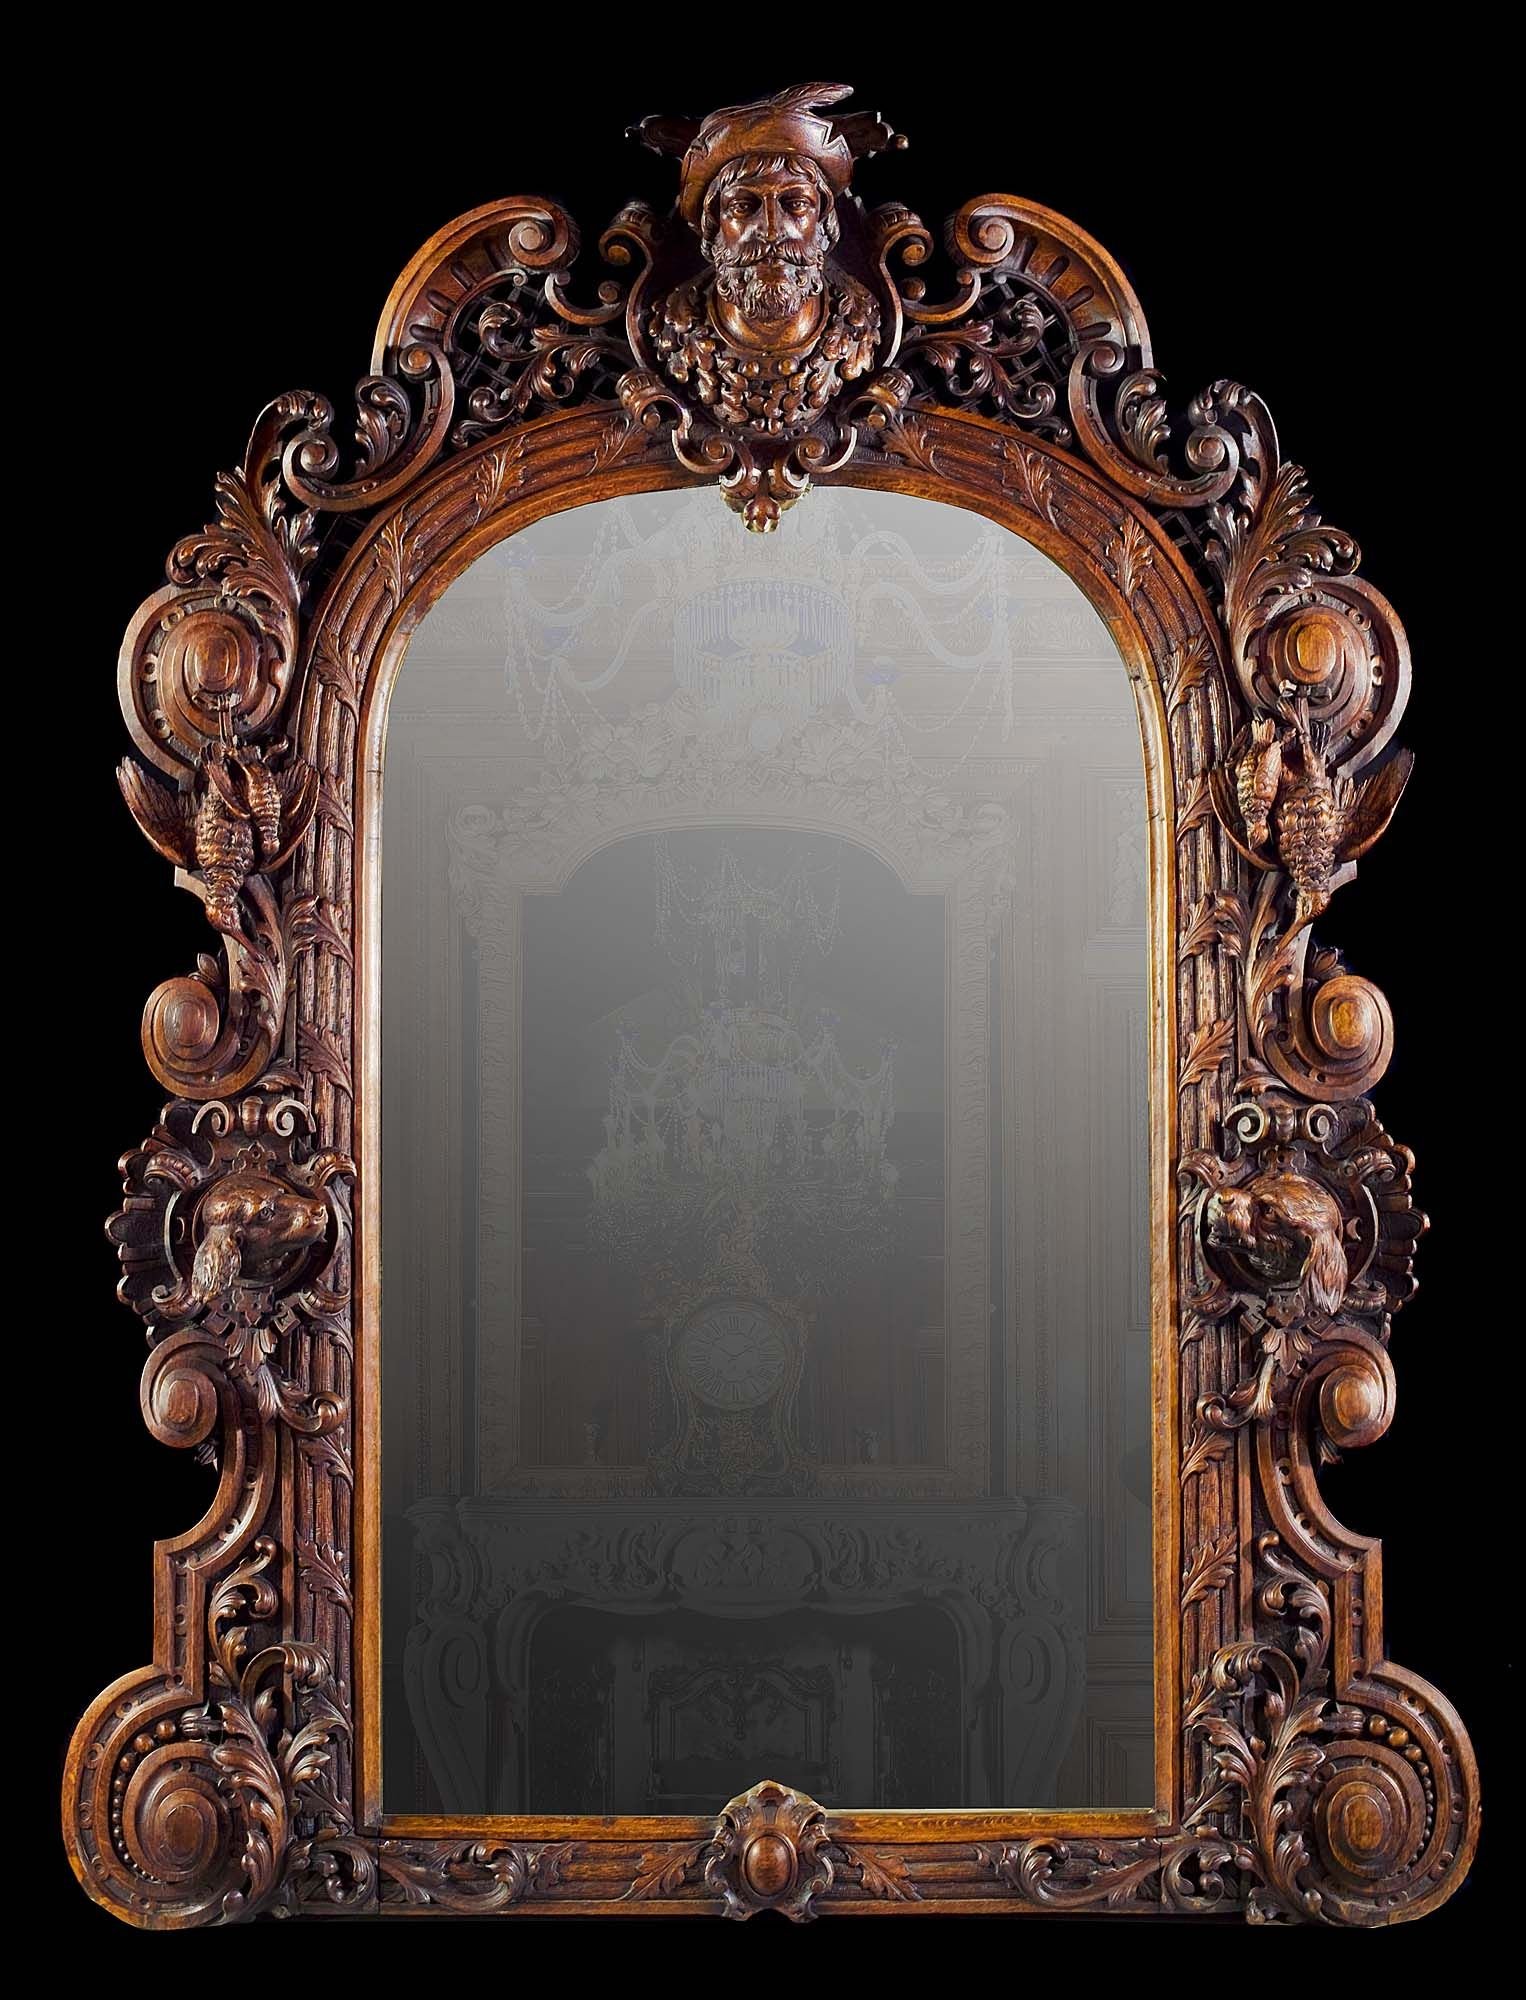 Картина старое зеркало. Антикварное зеркало. Старинное зеркало. Напольные зеркала в стиле Барокко. Антикварное напольное зеркало.